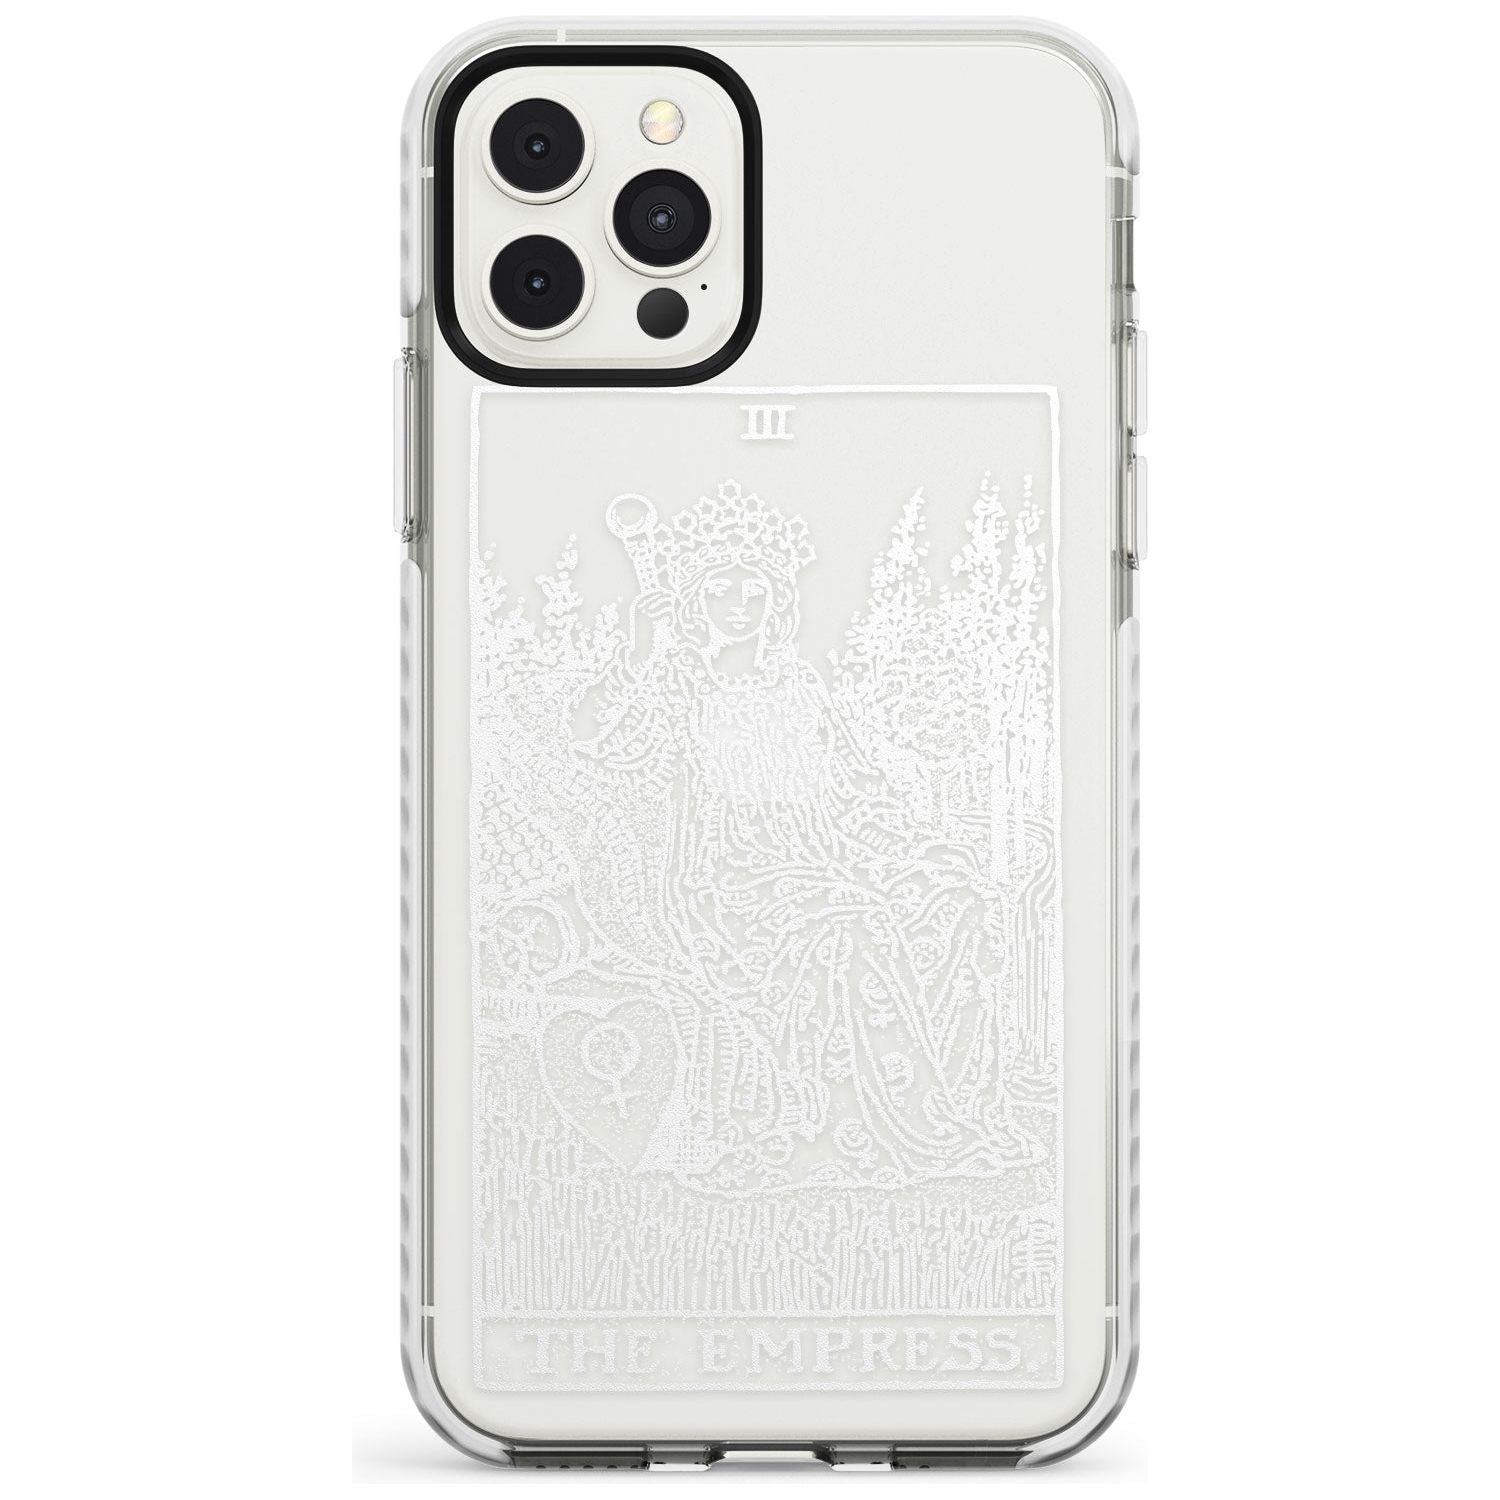 The Empress Tarot Card - White Transparent Slim TPU Phone Case for iPhone 11 Pro Max